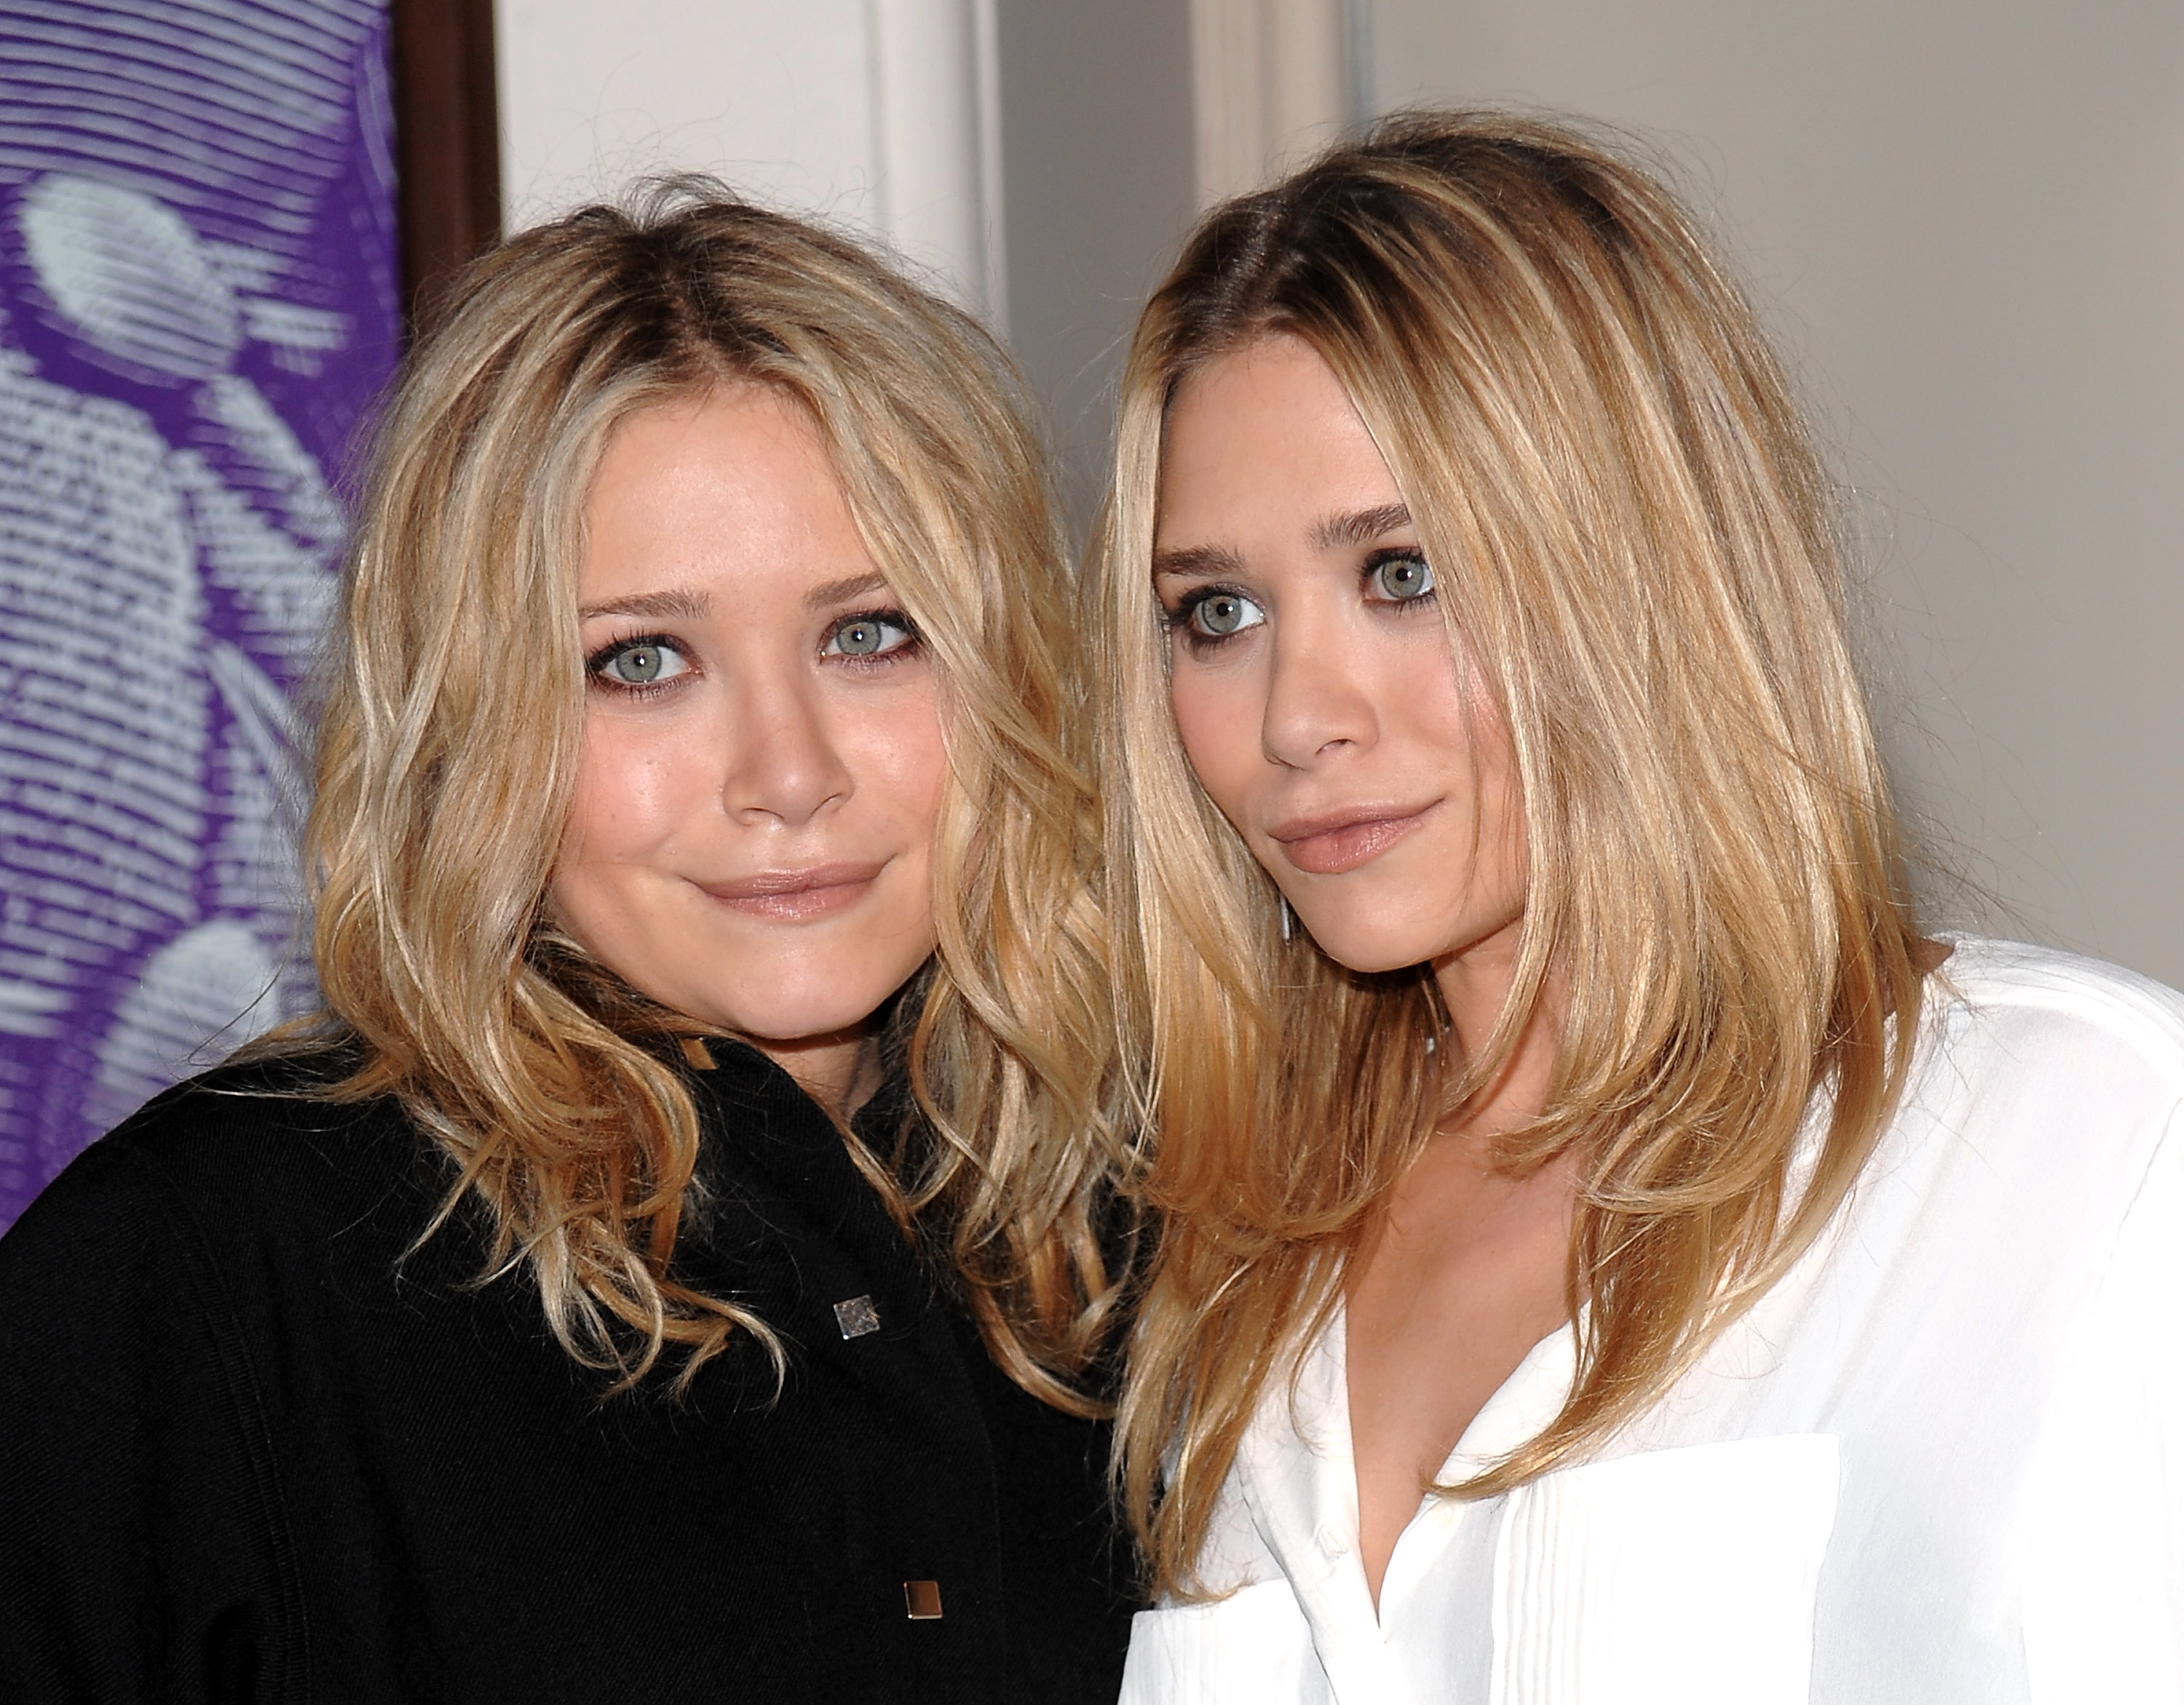 Olsen fashion sense means double trouble | The Spokesman-Review